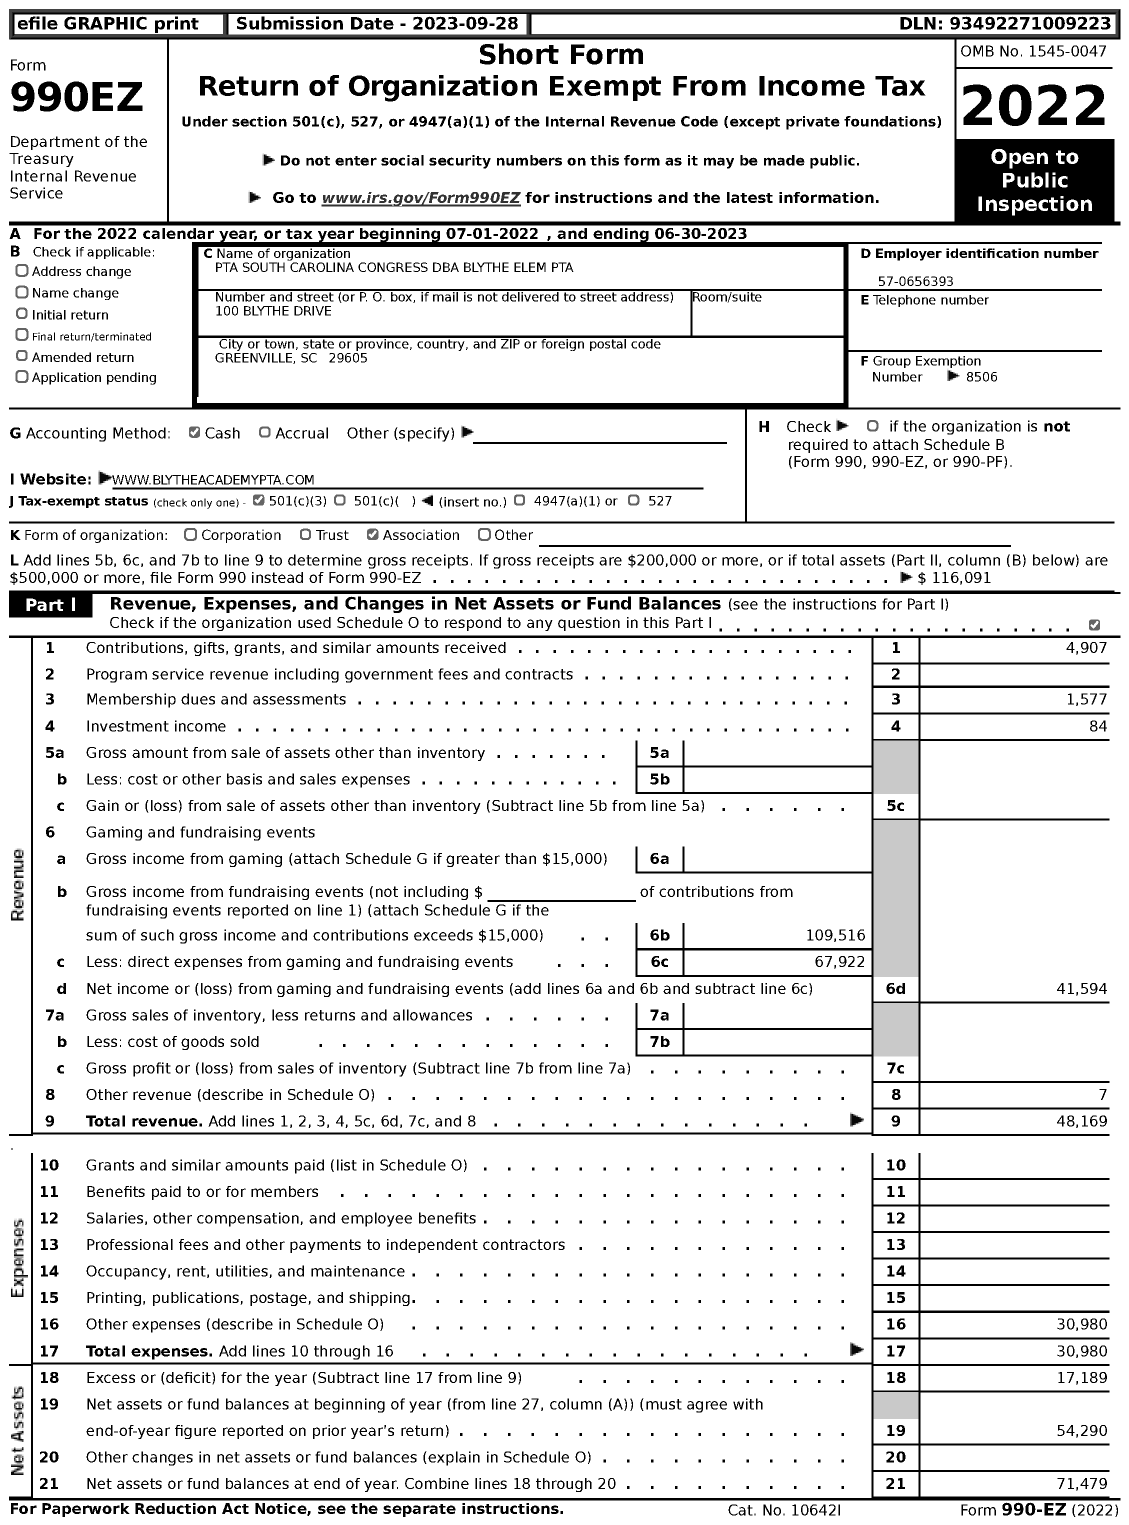 Image of first page of 2022 Form 990EZ for Blythe Elem PTA